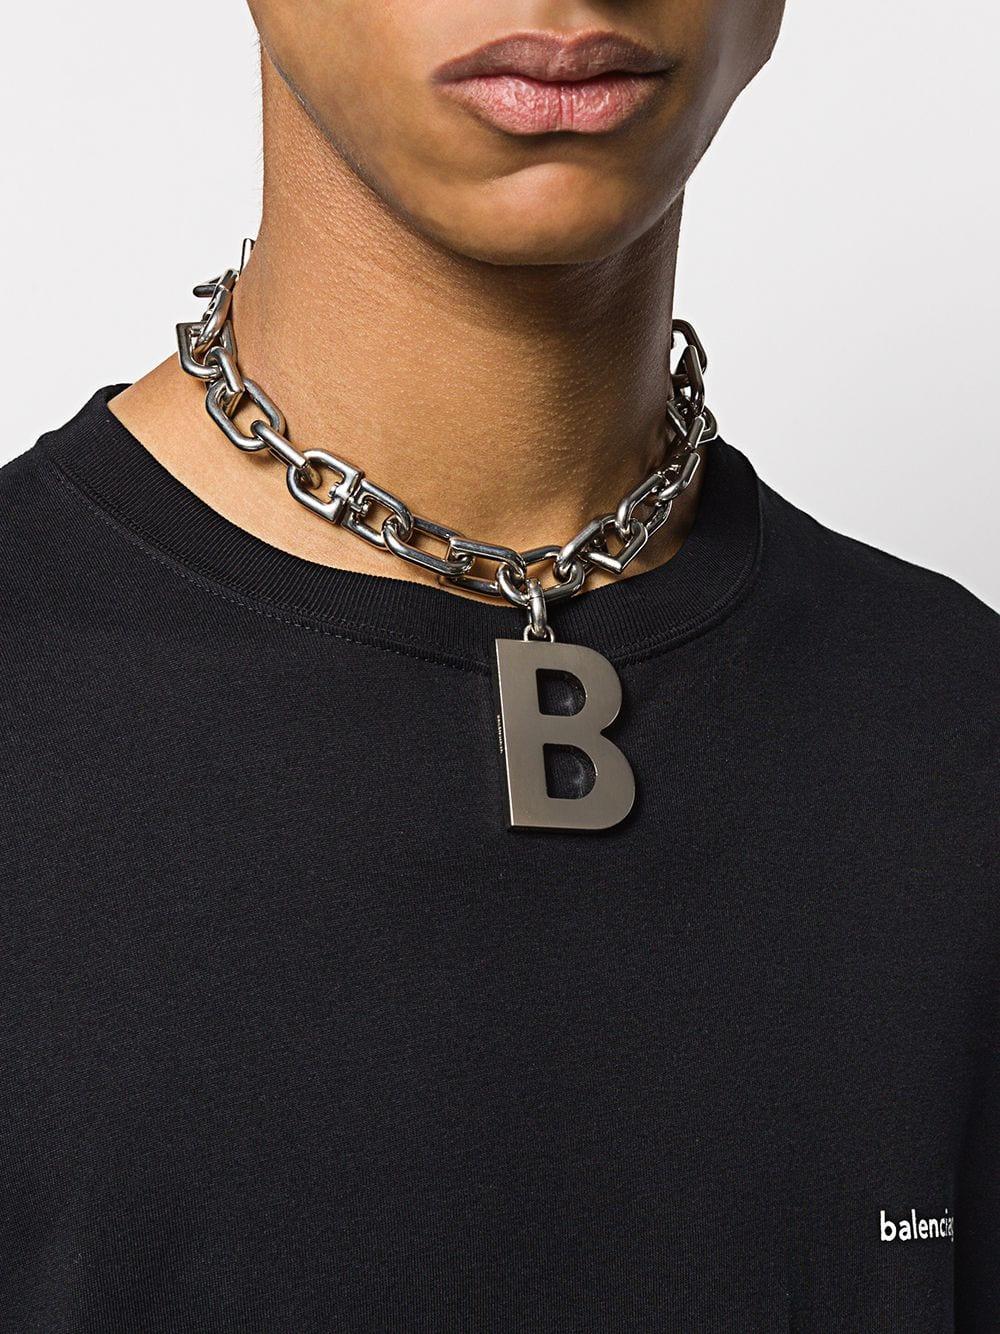 Balenciaga B Chain Necklace in Silver (Metallic) for Men - Lyst